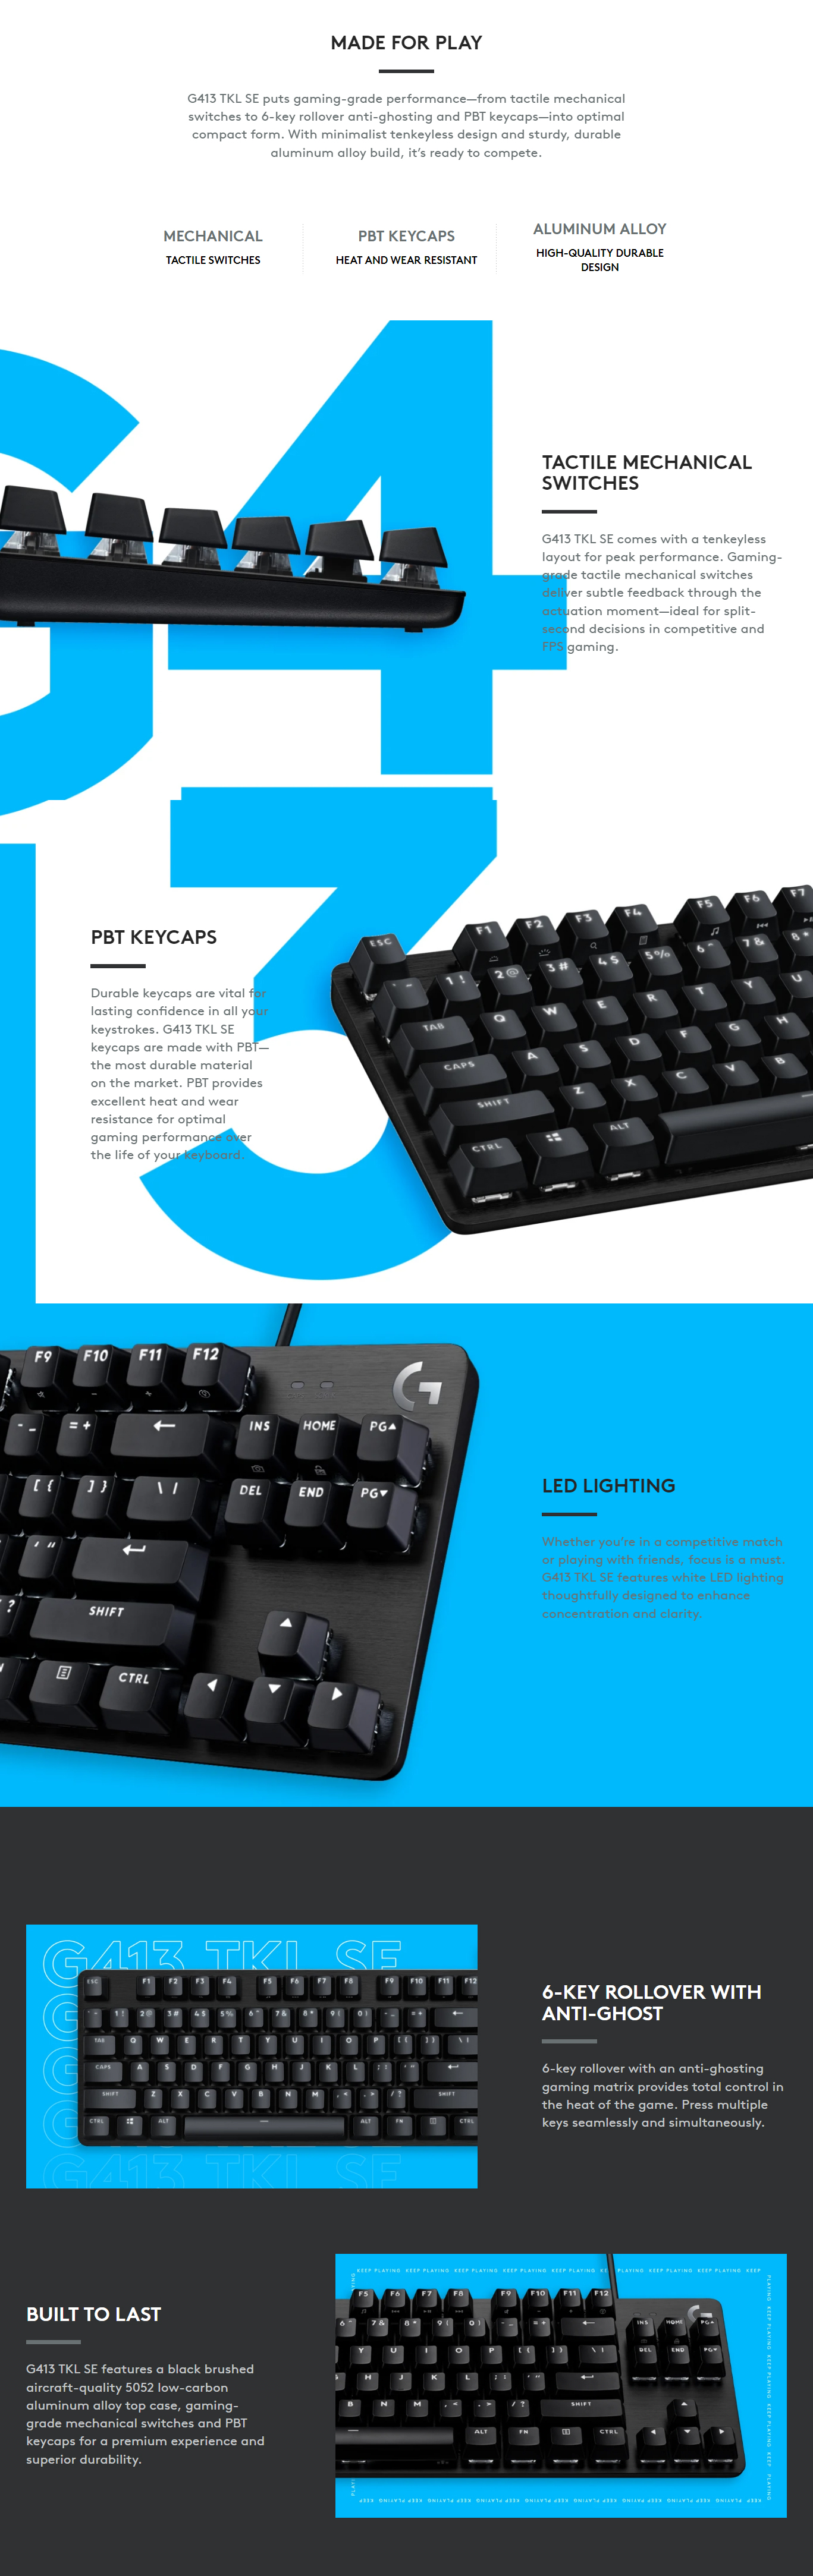 Keyboards-Logitech-G413-TKL-SE-Mechanical-Gaming-Keyboard-4